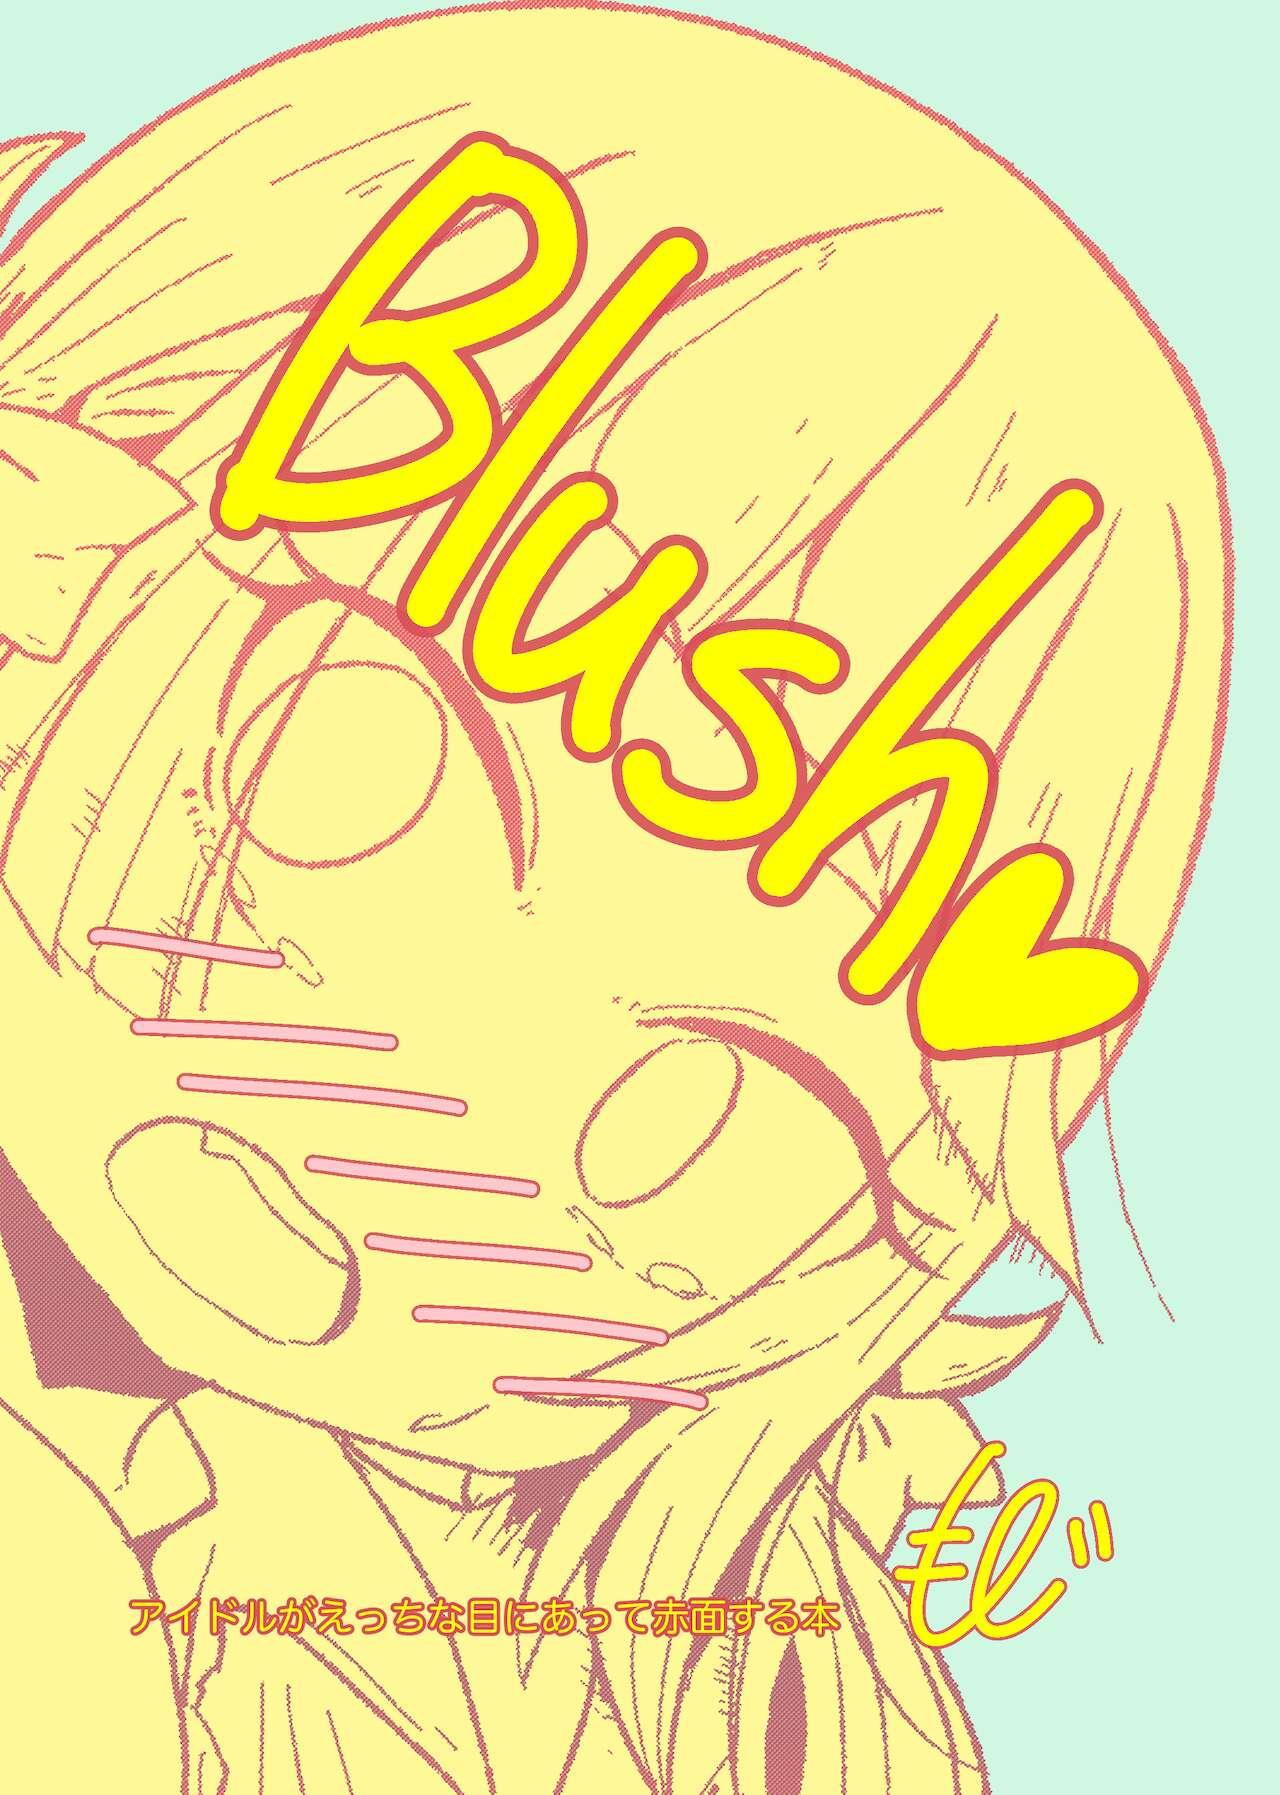 Blush 0